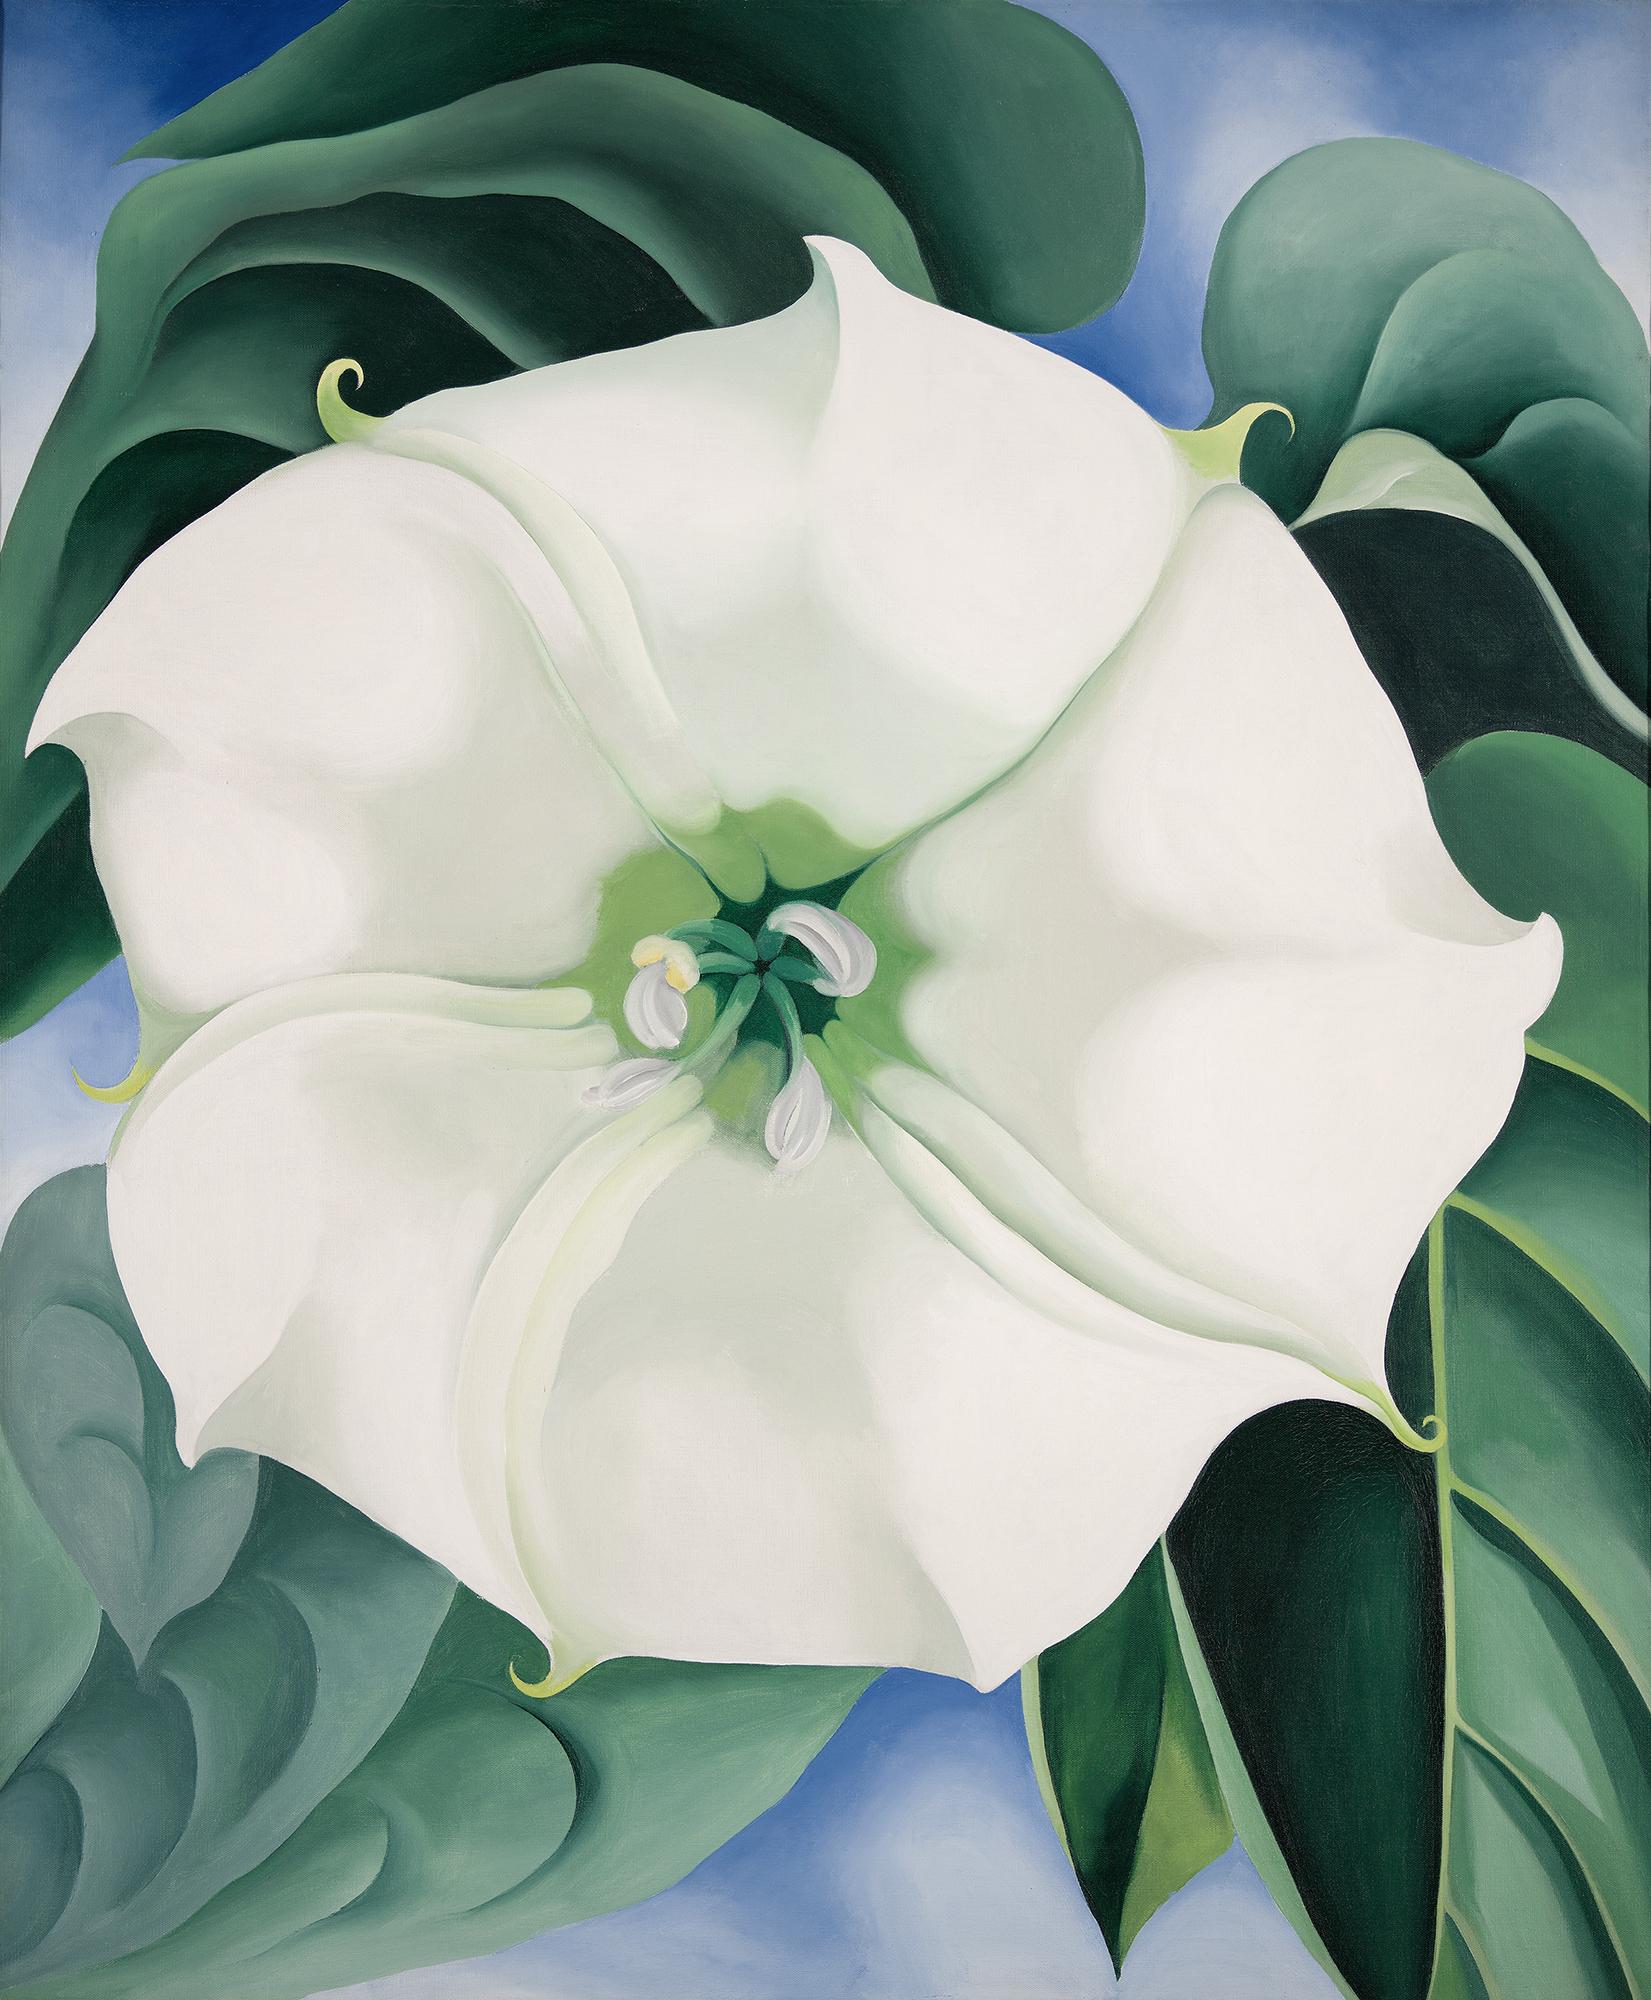 Georgia O'Keeffe, "Jimson Weed/Fleur blanche No 1", 1932. [Georgia O'Keeffe Museum / 2021, ProLitteris, Zurich - Edward C. Robison III]